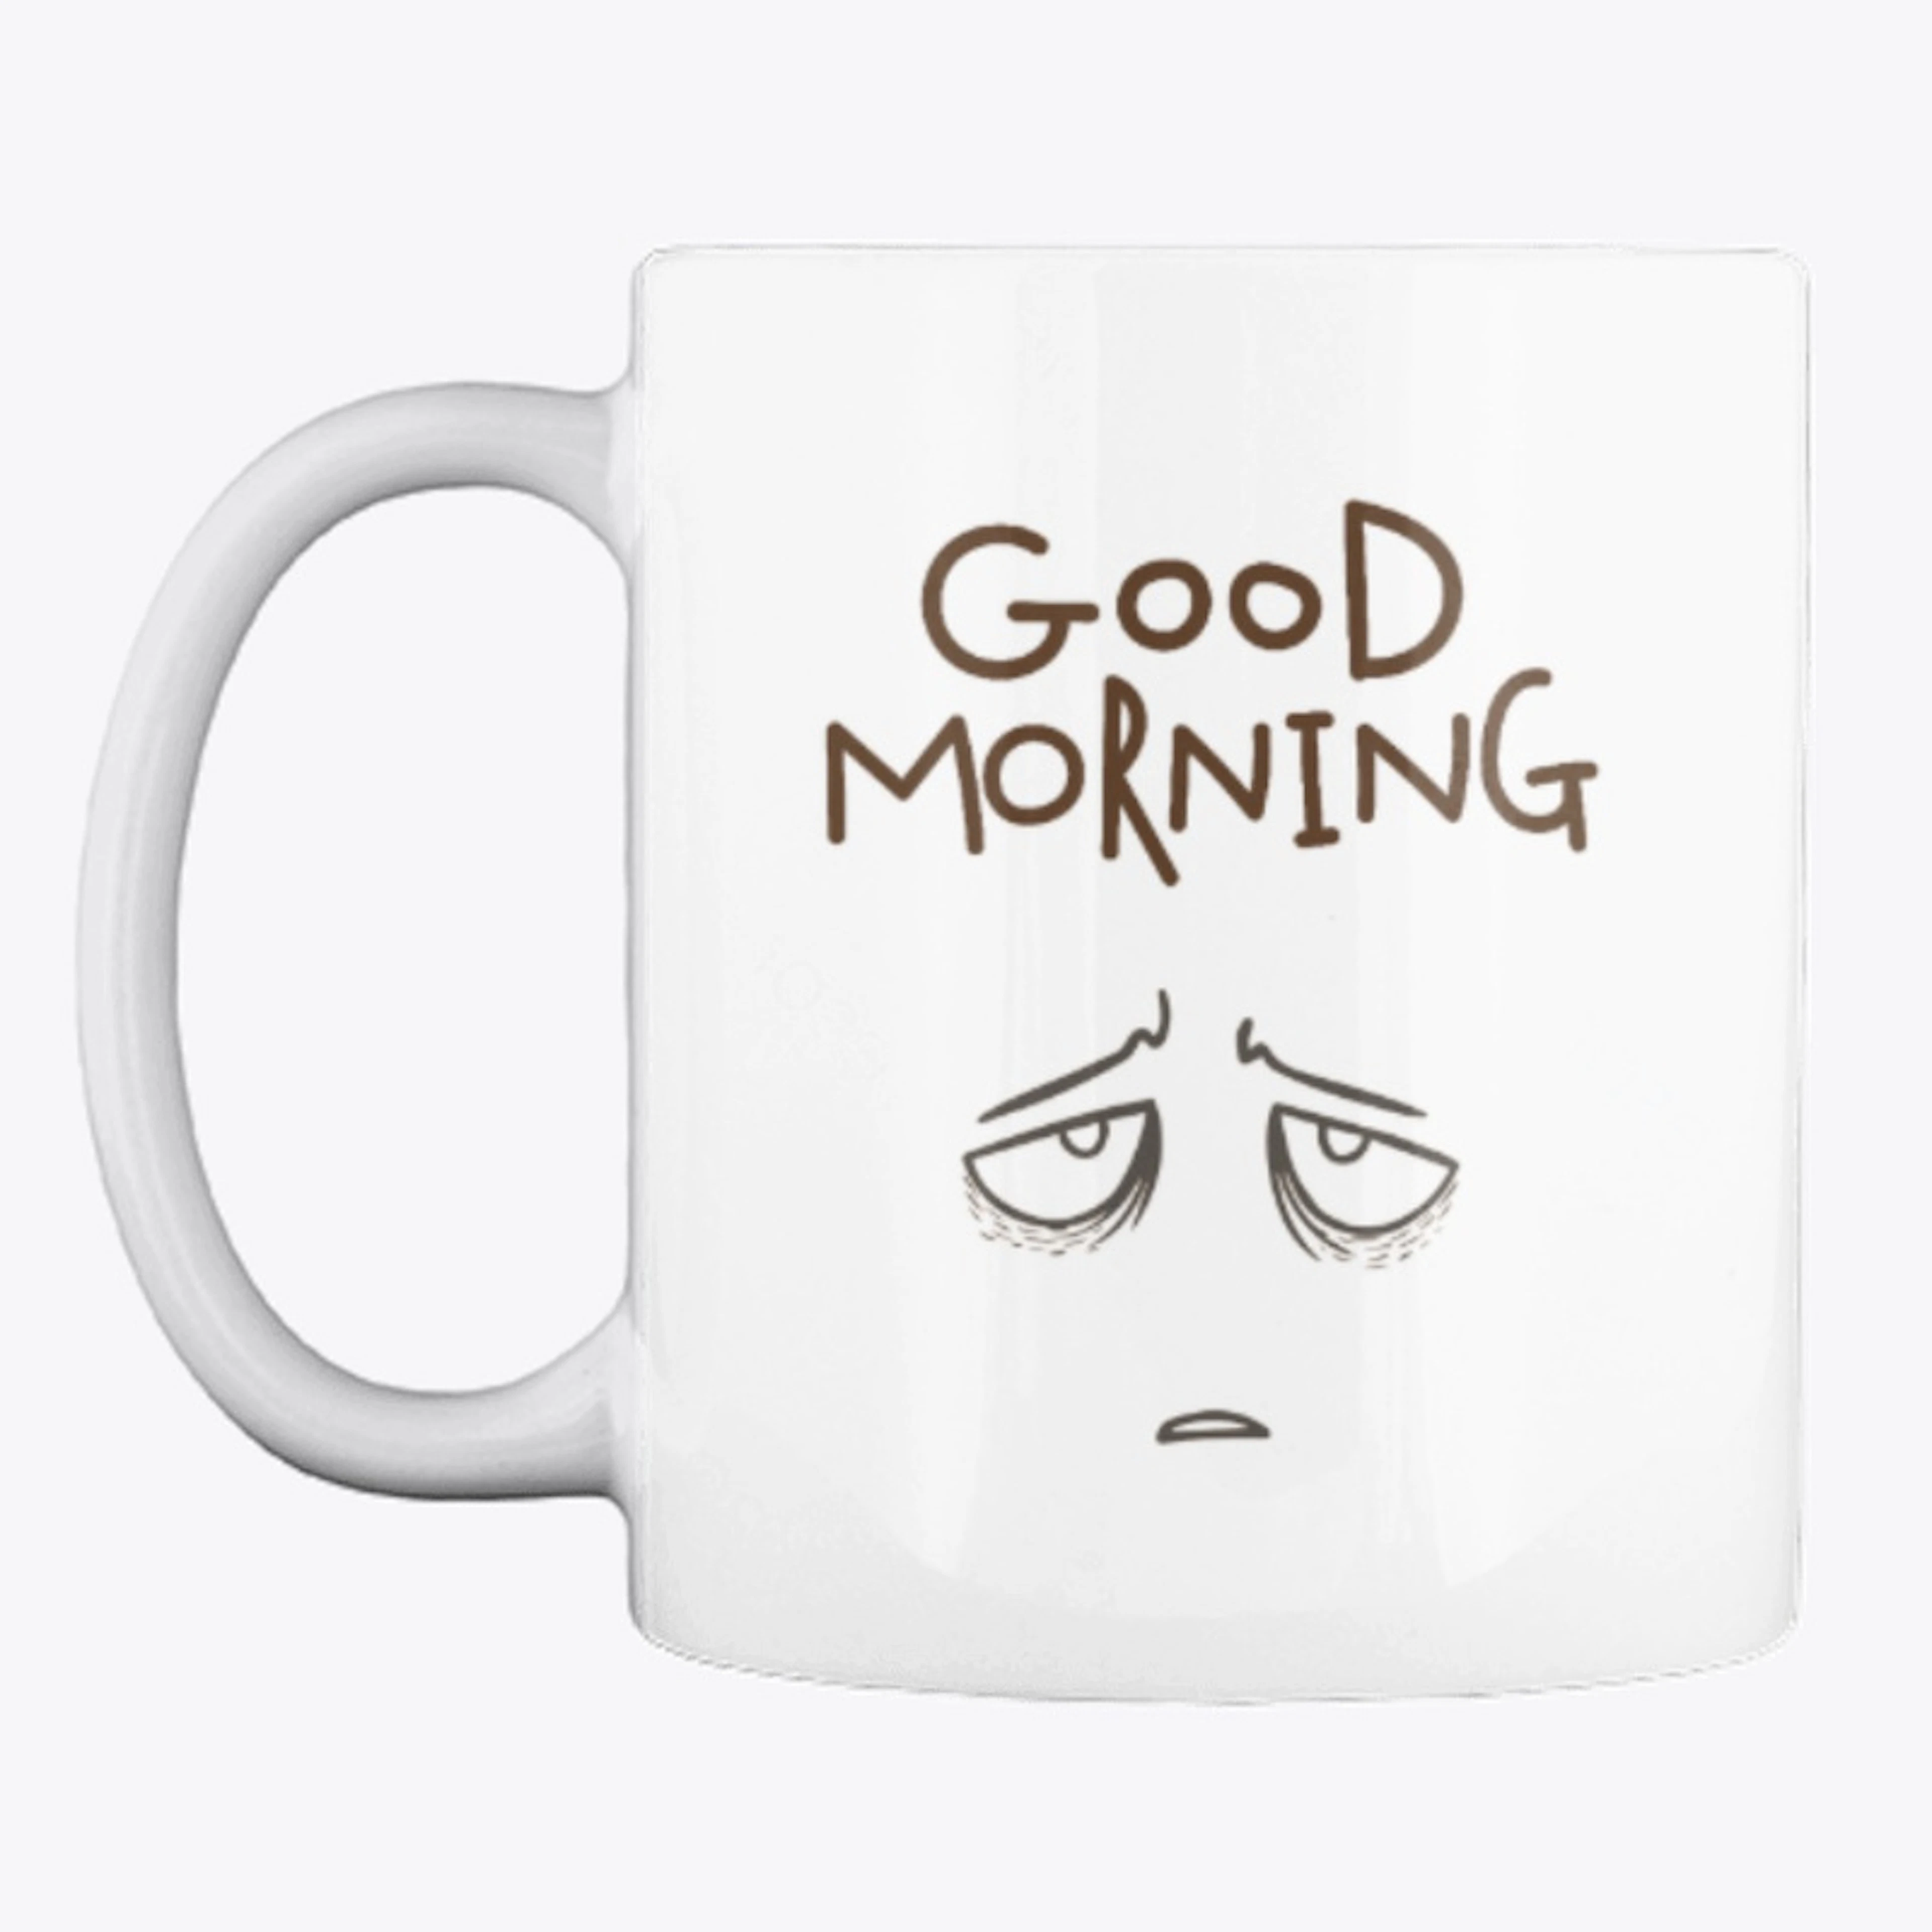 Good morning coffee